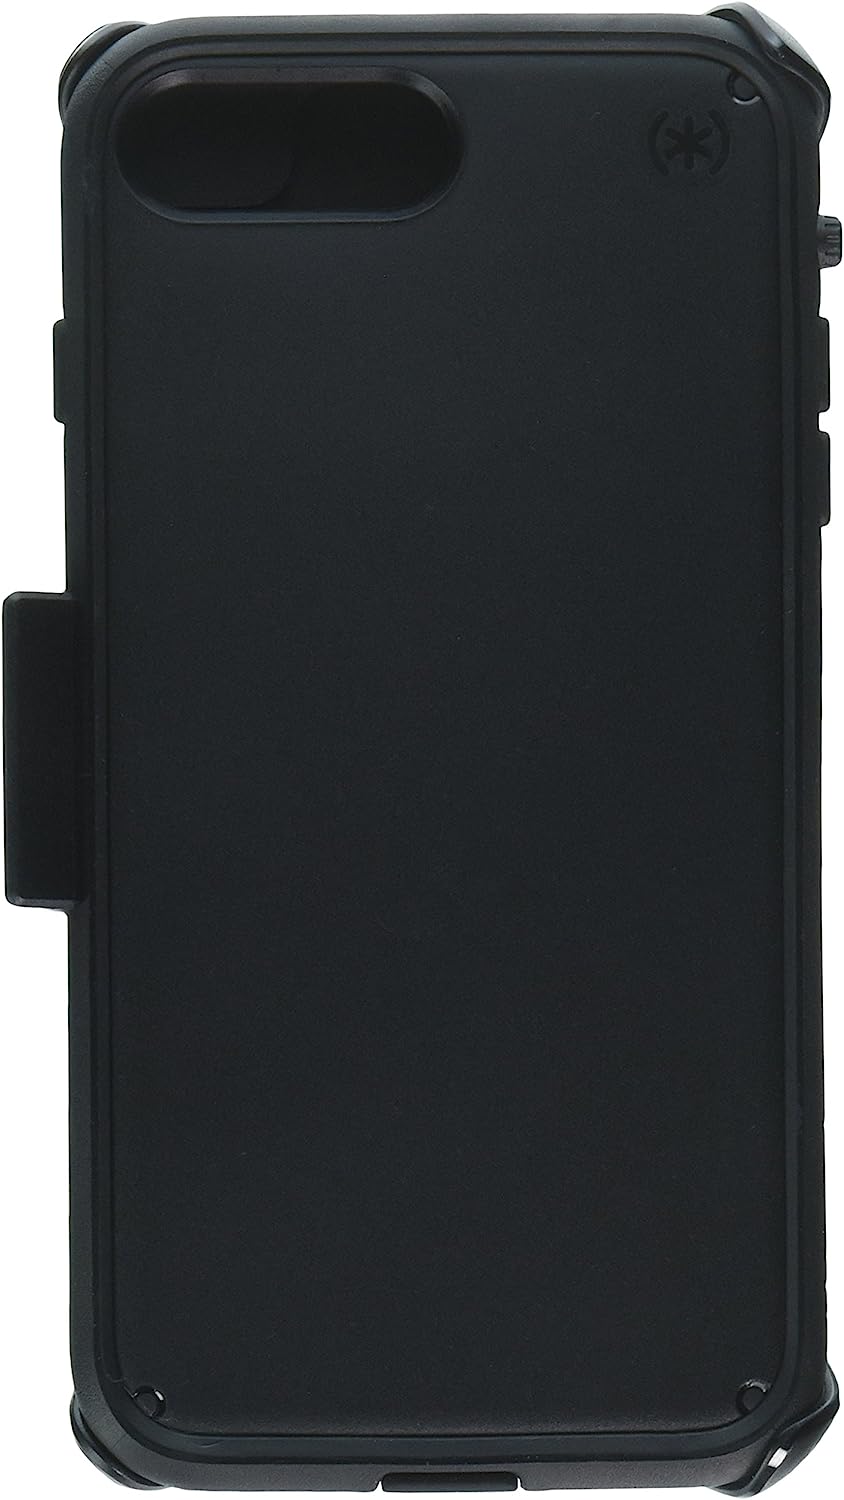 Speck Presidio Ultra Case for iPhone 8/7, Black